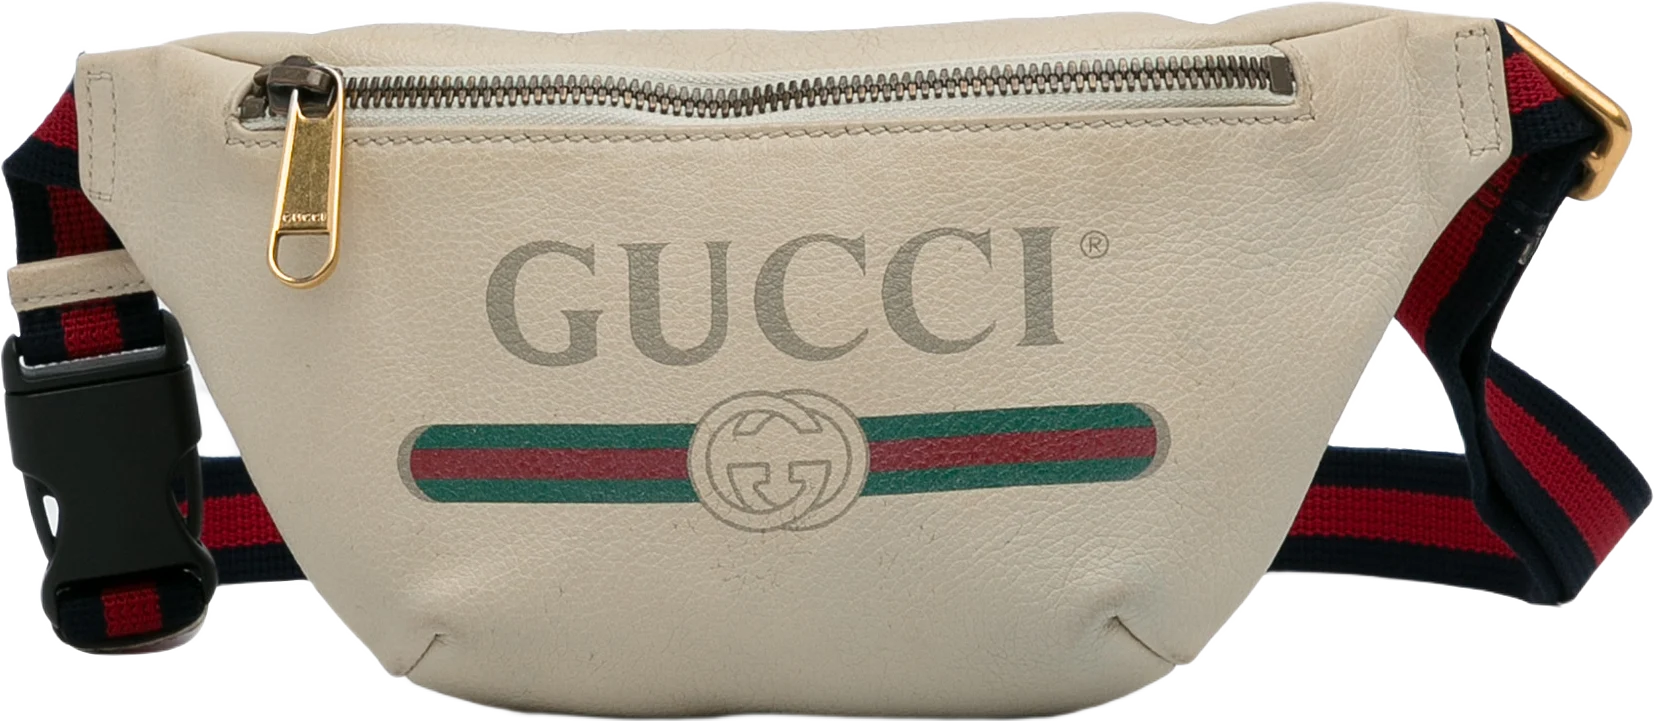 Gucci Small Logo Belt Bag